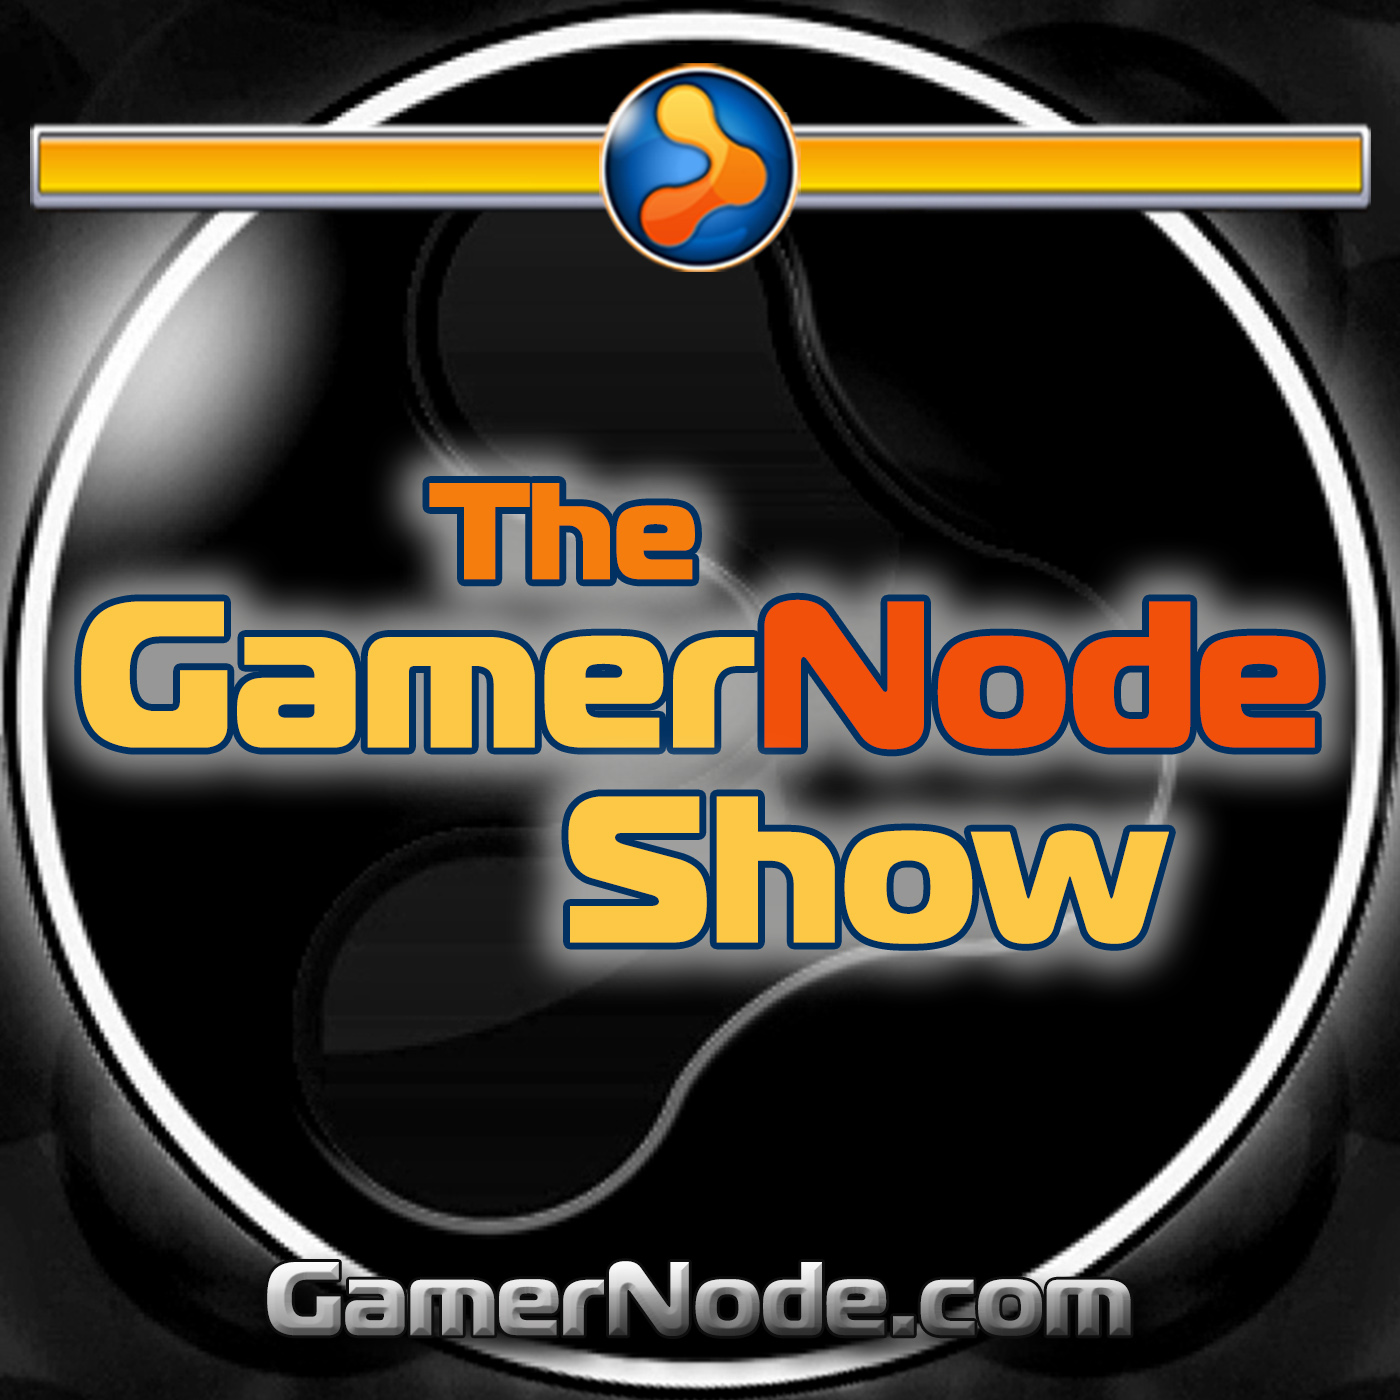 The GamerNode Show